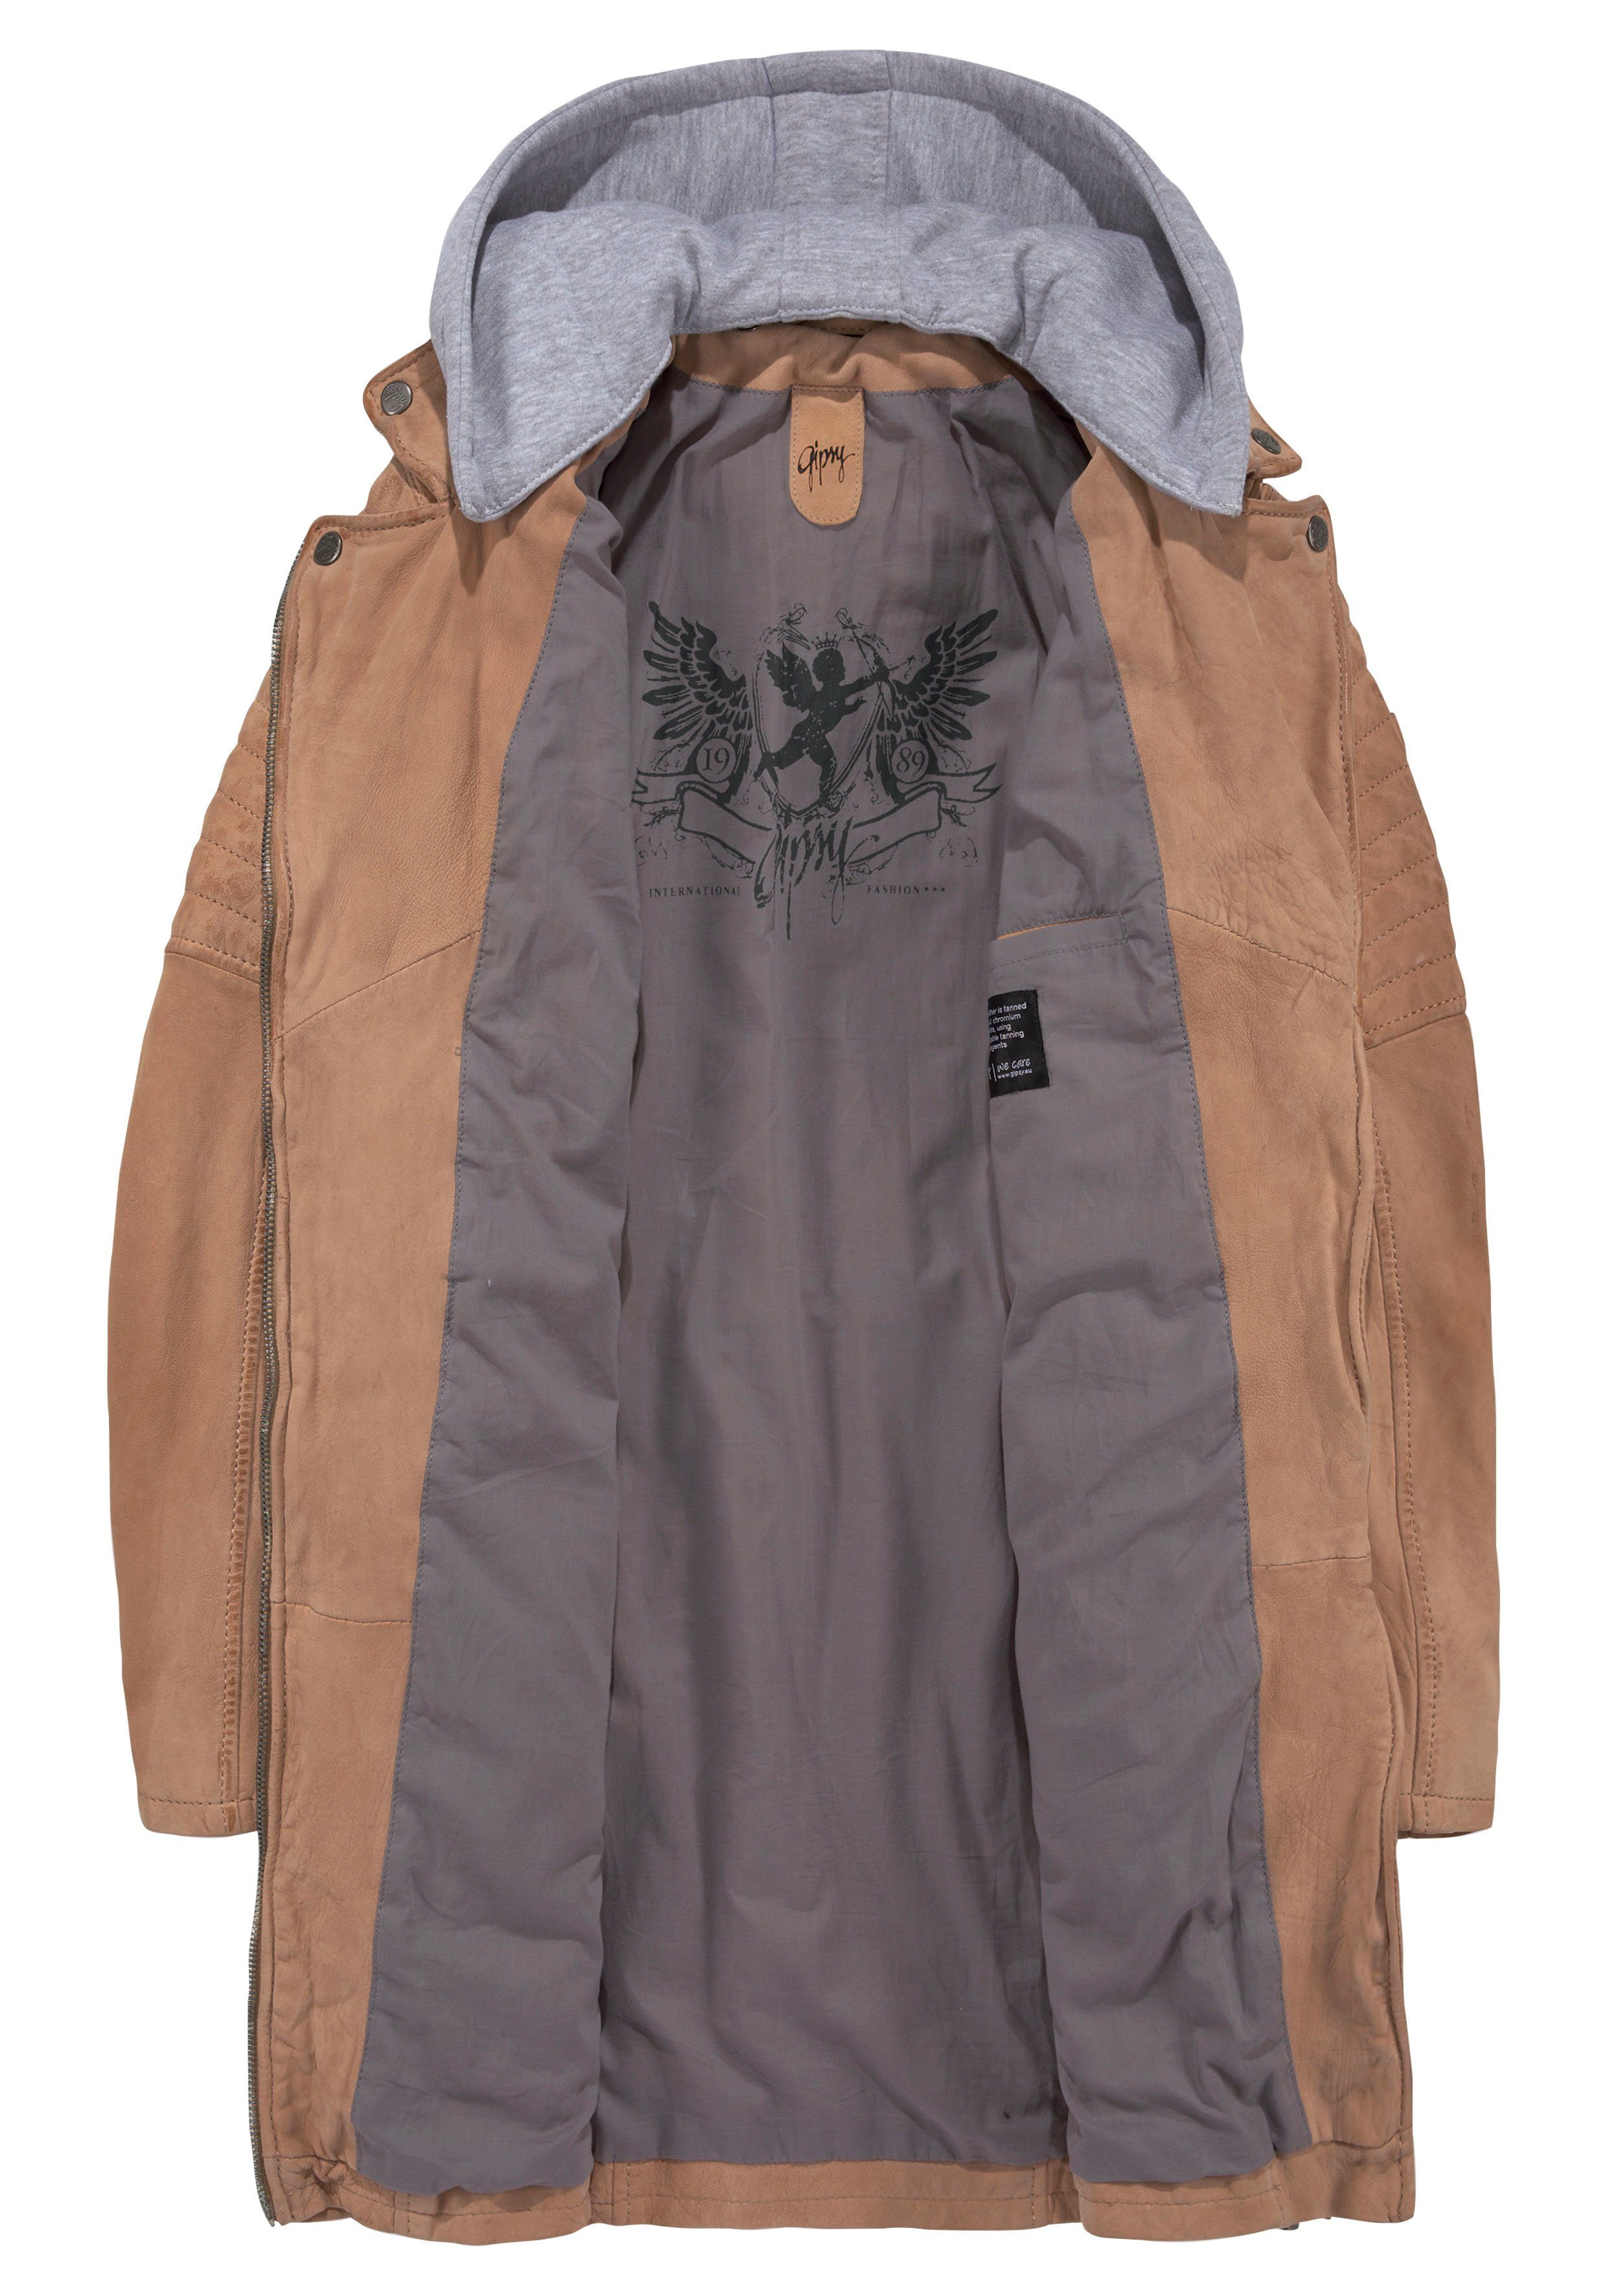 Gipsy CYARA Kapuzen-Inlay mit Jerseyqualität Lederjacke aus Lederjacke beige abnehmbarem